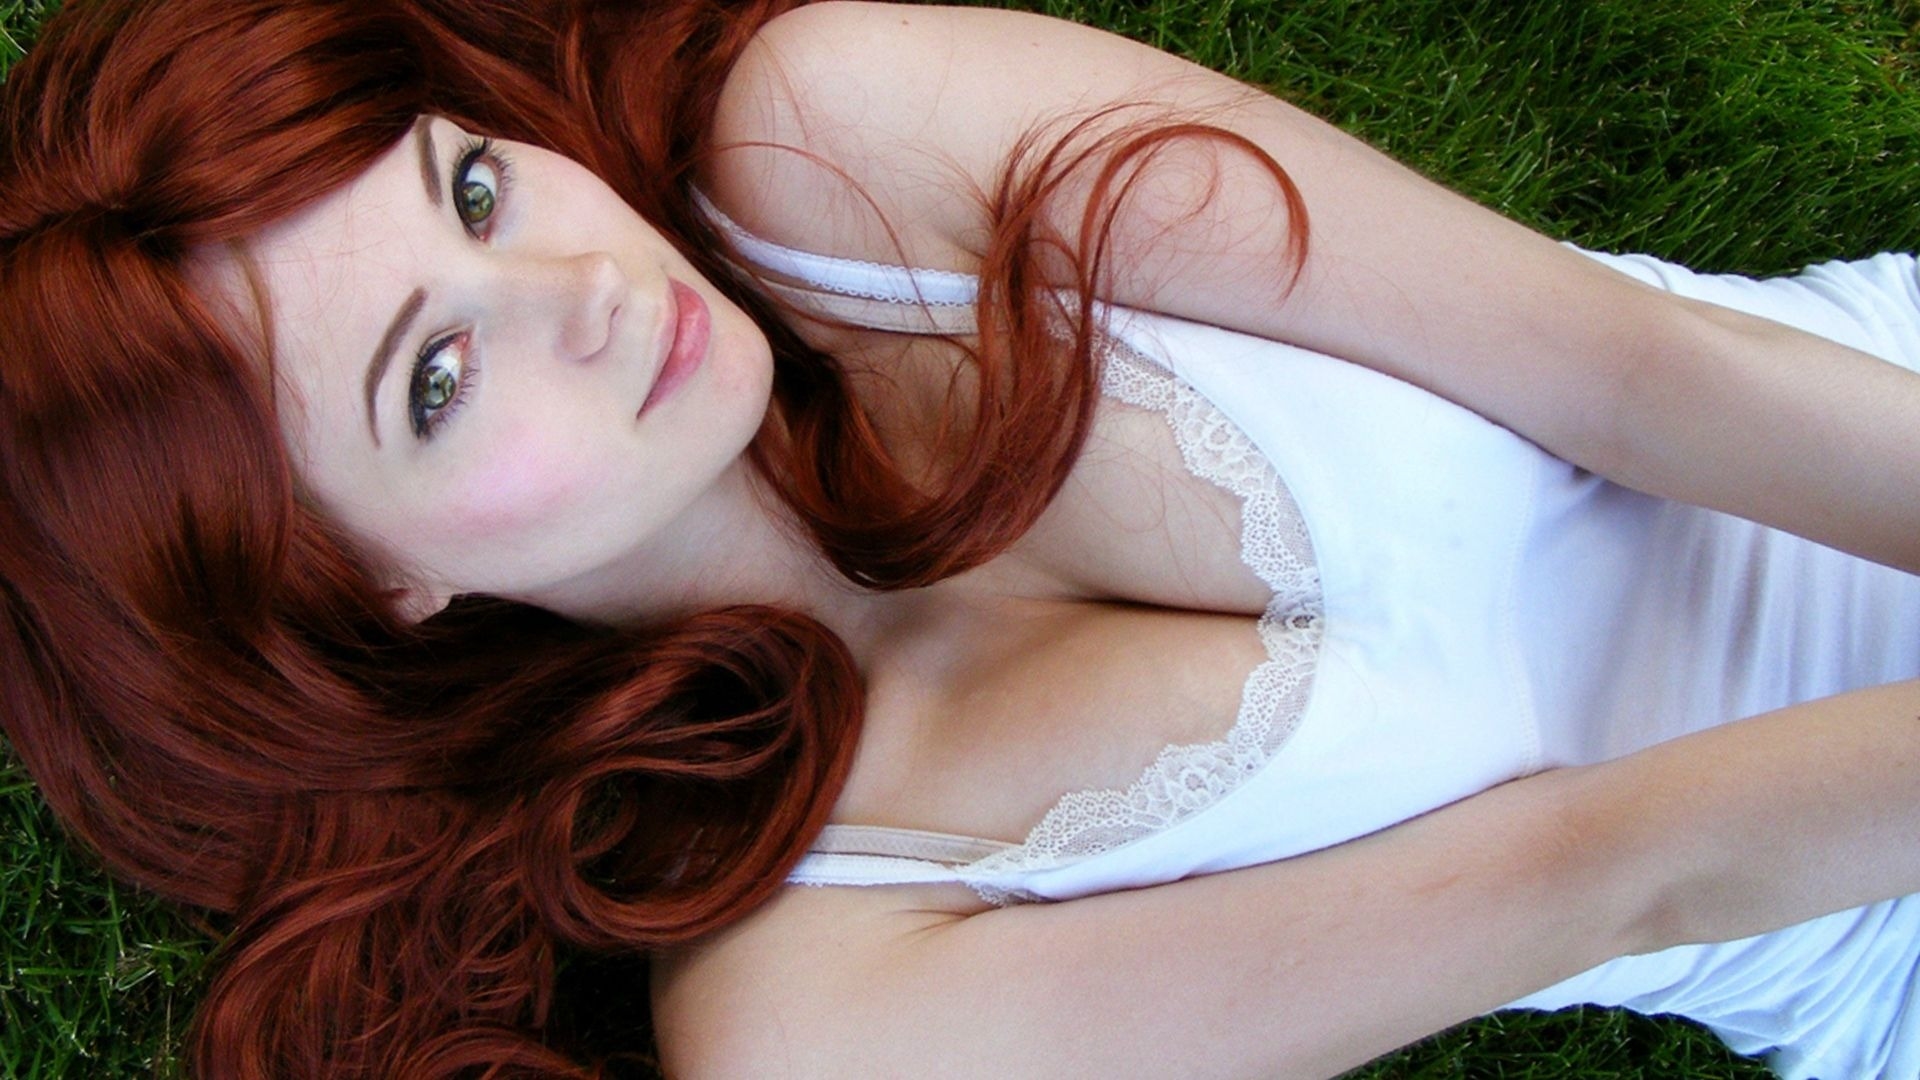 Nude Female Redhead Pics